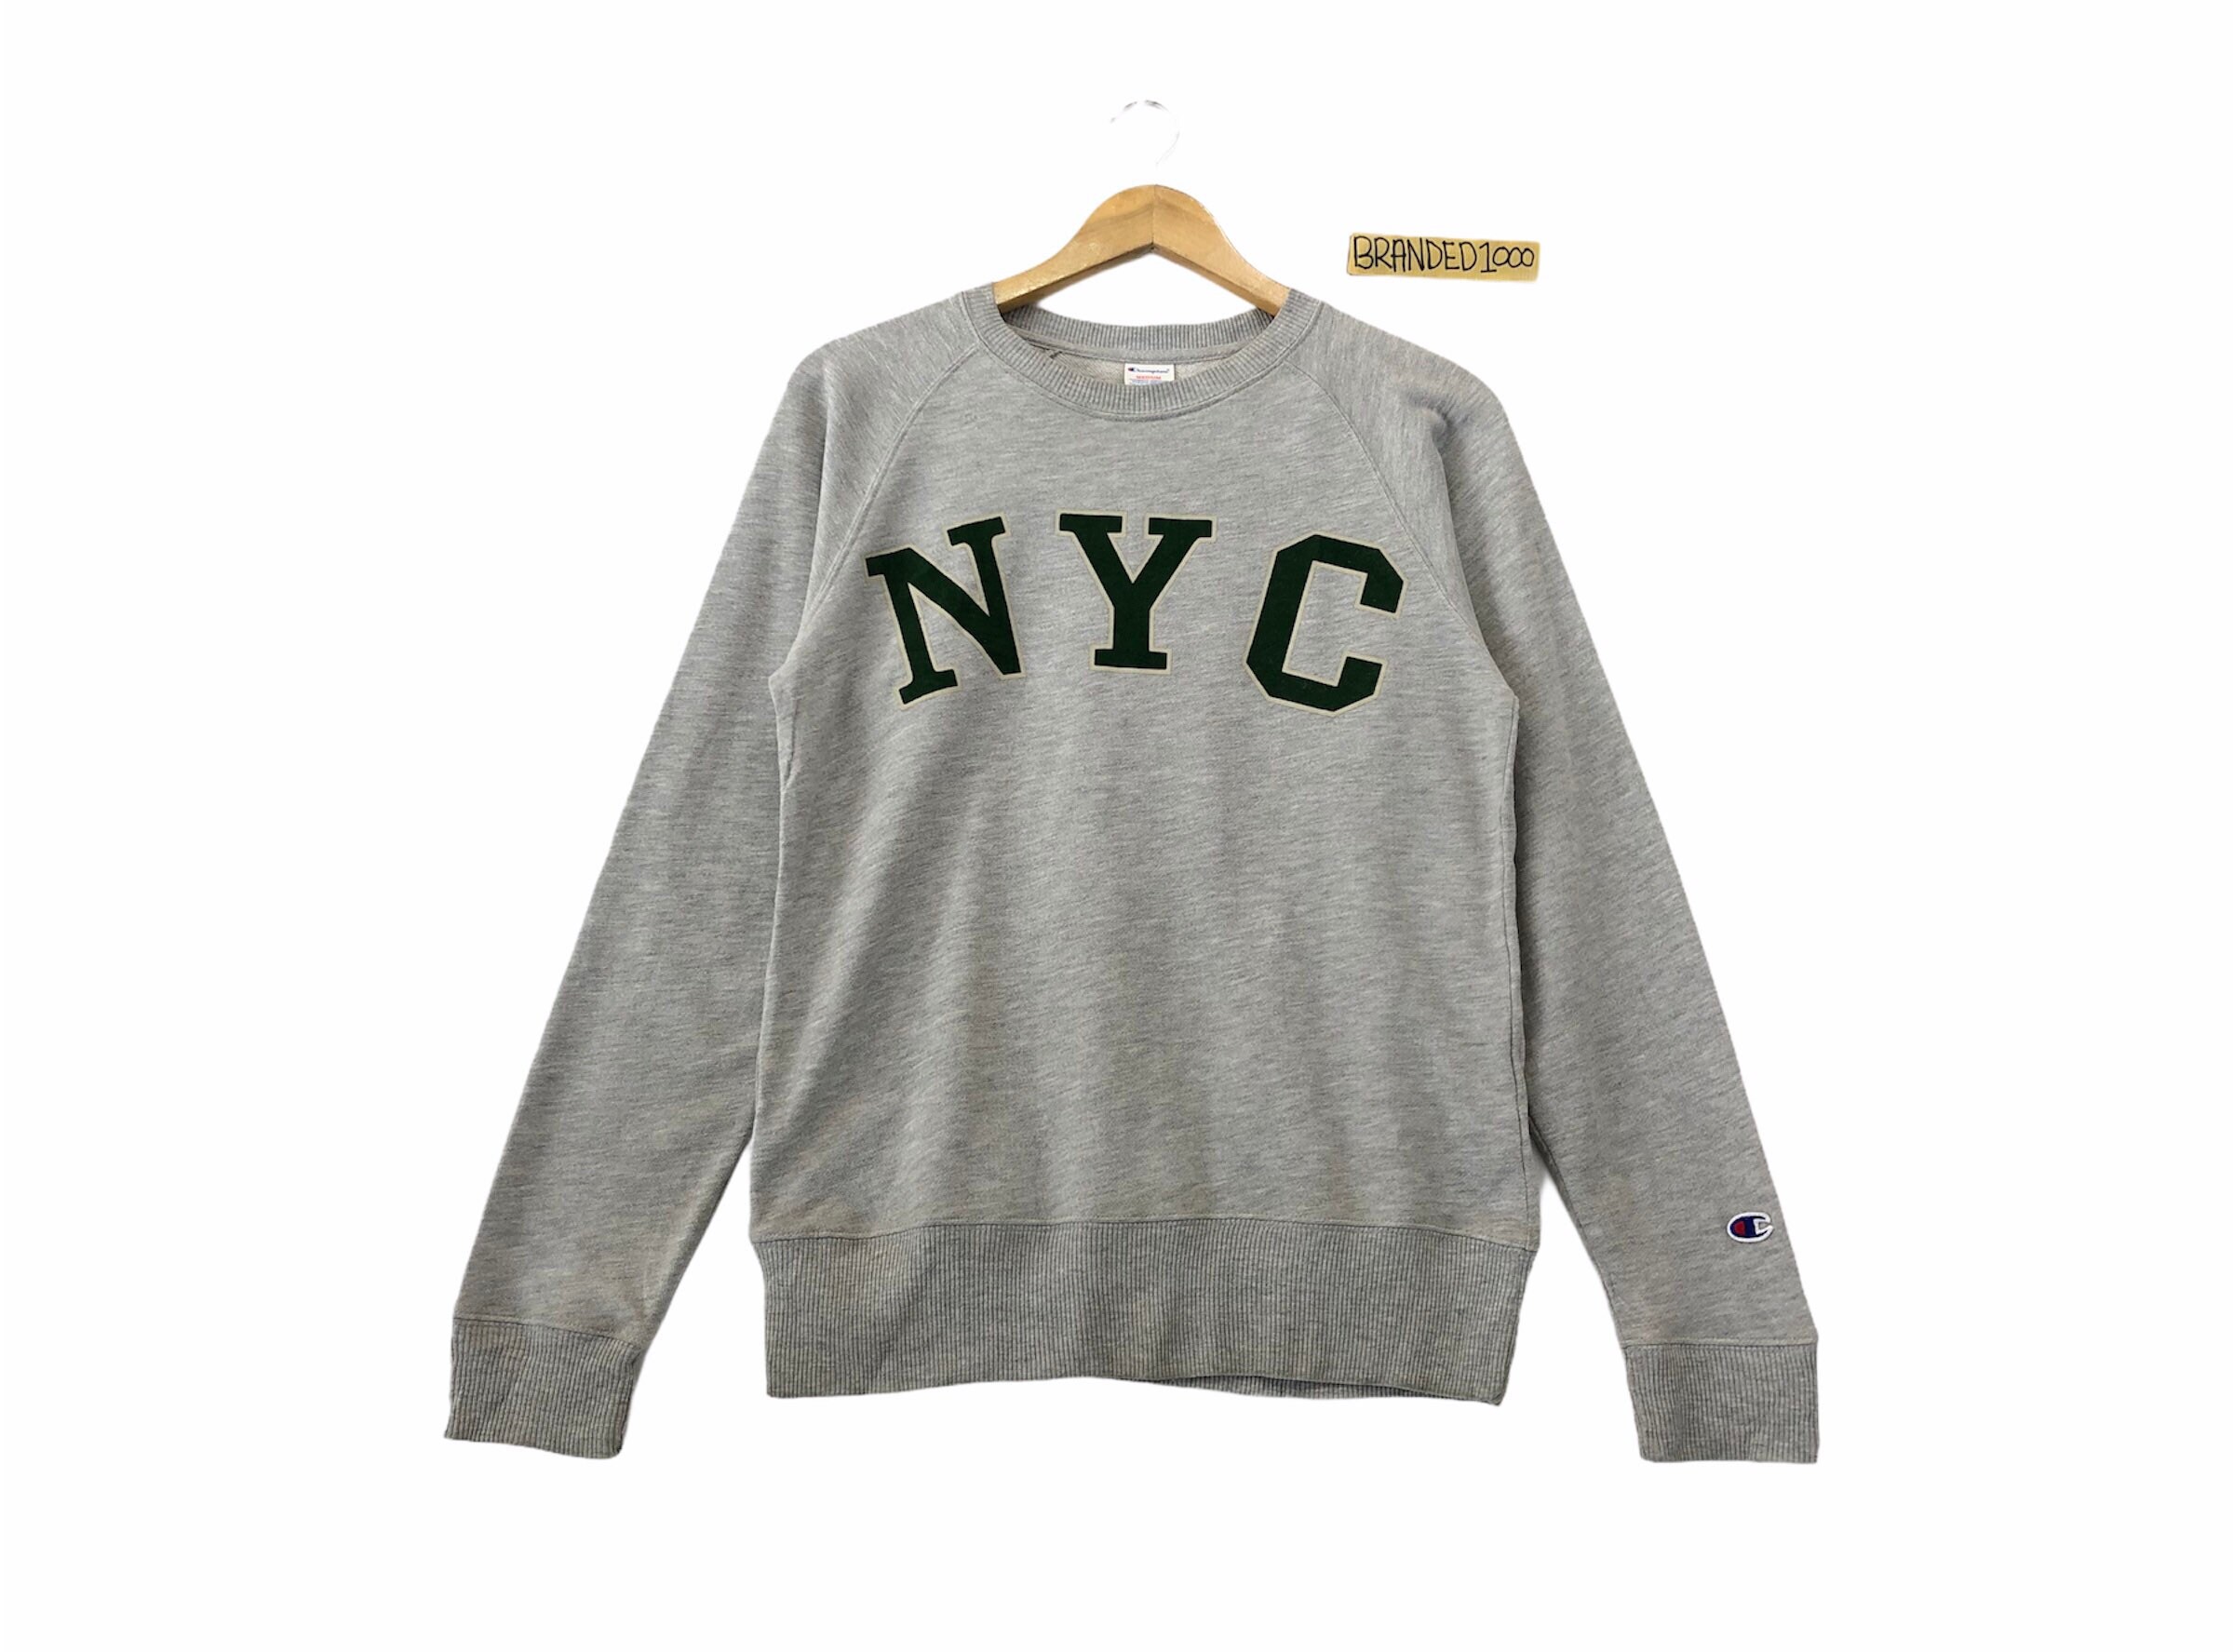 Rare!!Vintage Champion Sweatshirt Small Logo New York Spellout Small Logo Pullover Jumper Sweater